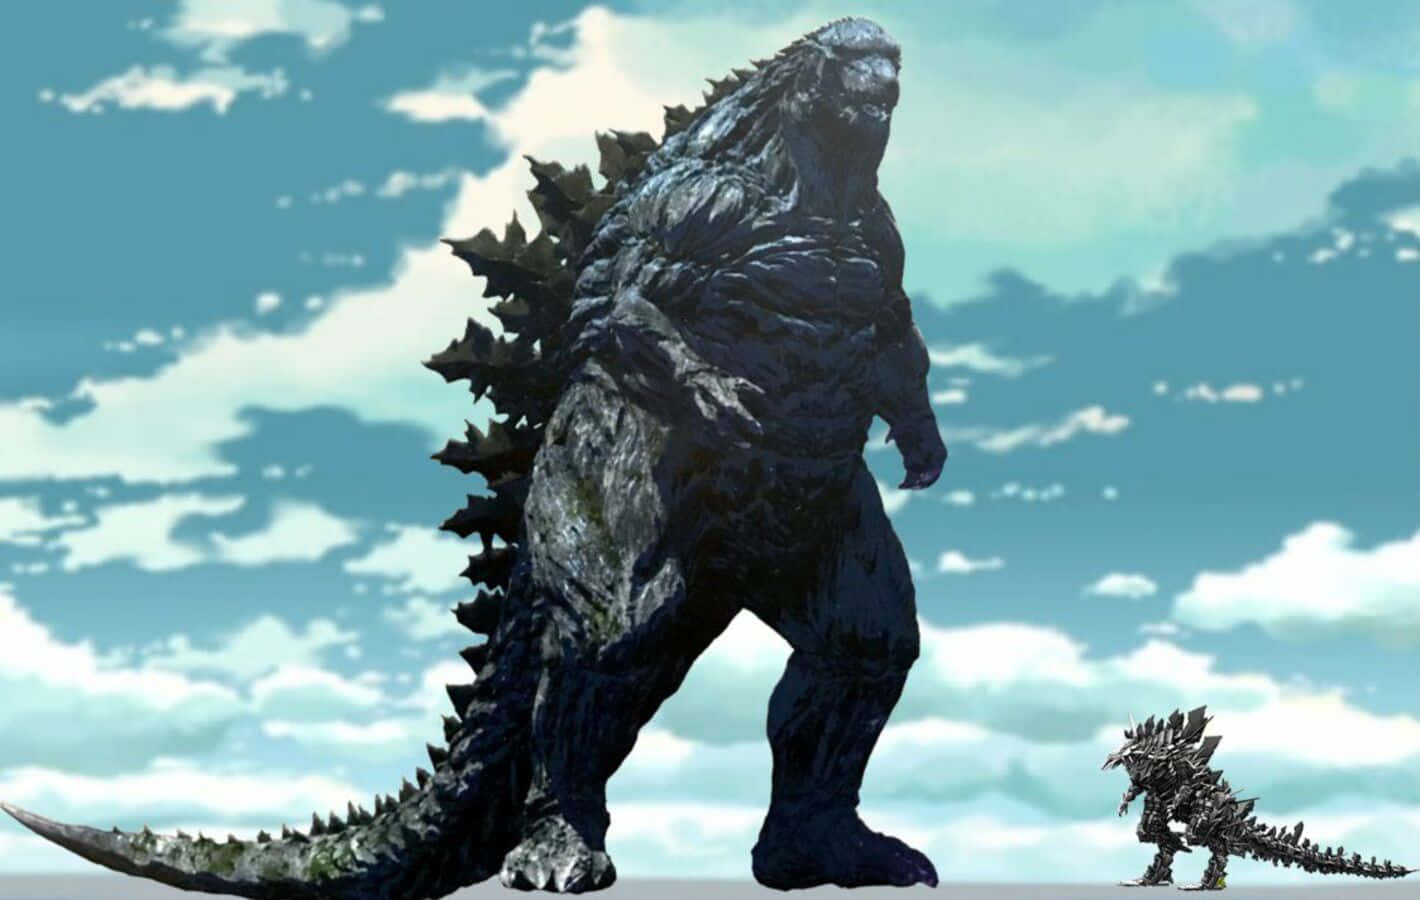 Majestic Godzilla Earth dominating the skyline Wallpaper